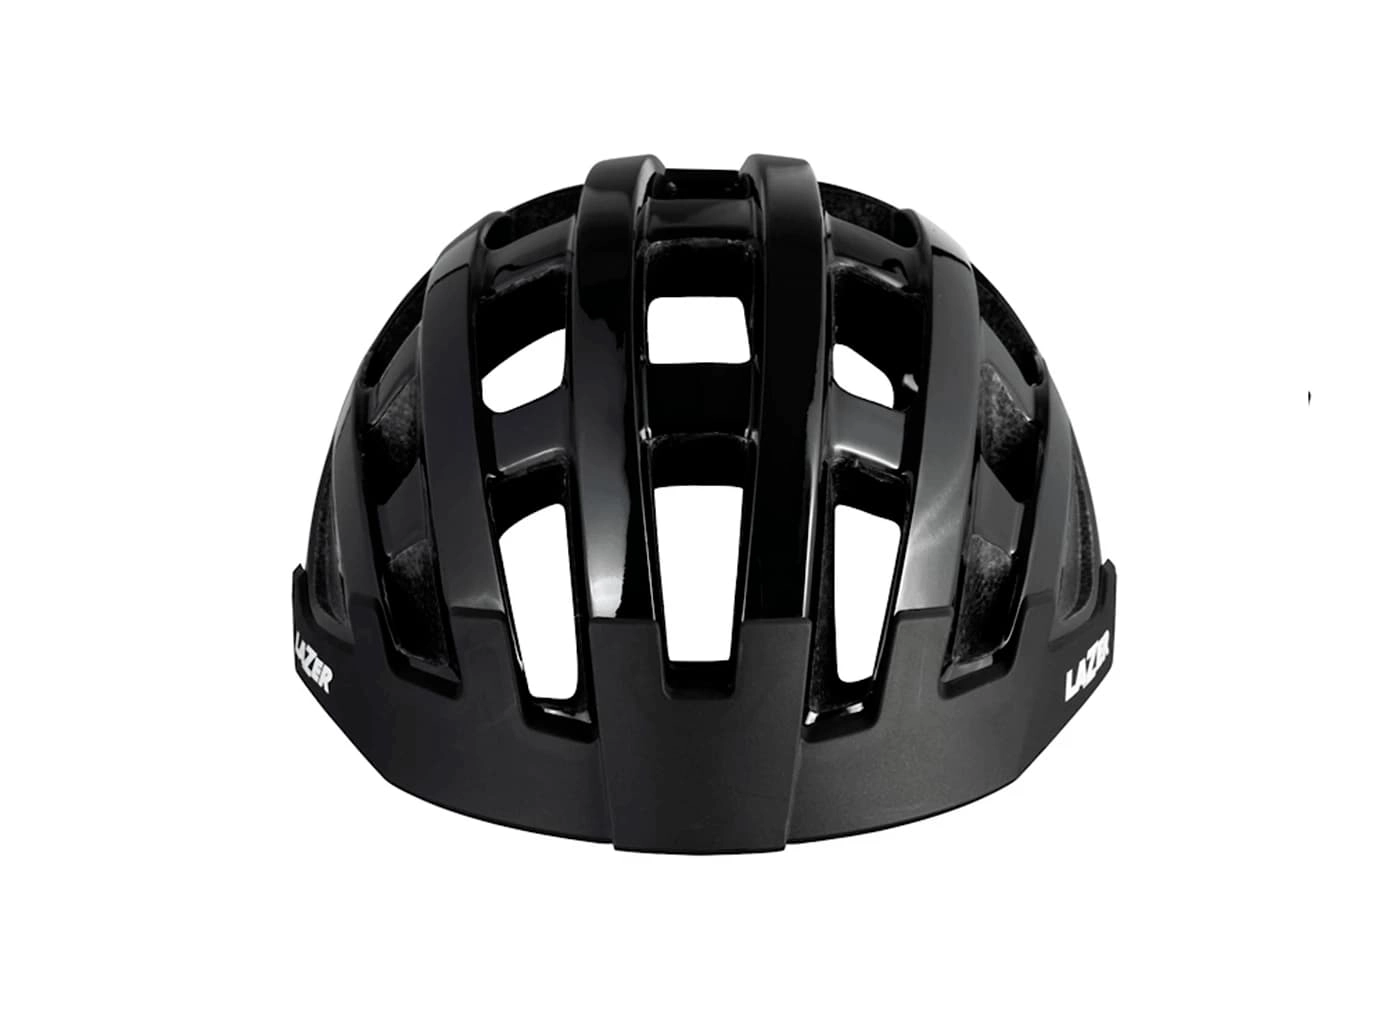 Lazer Compact helmet black